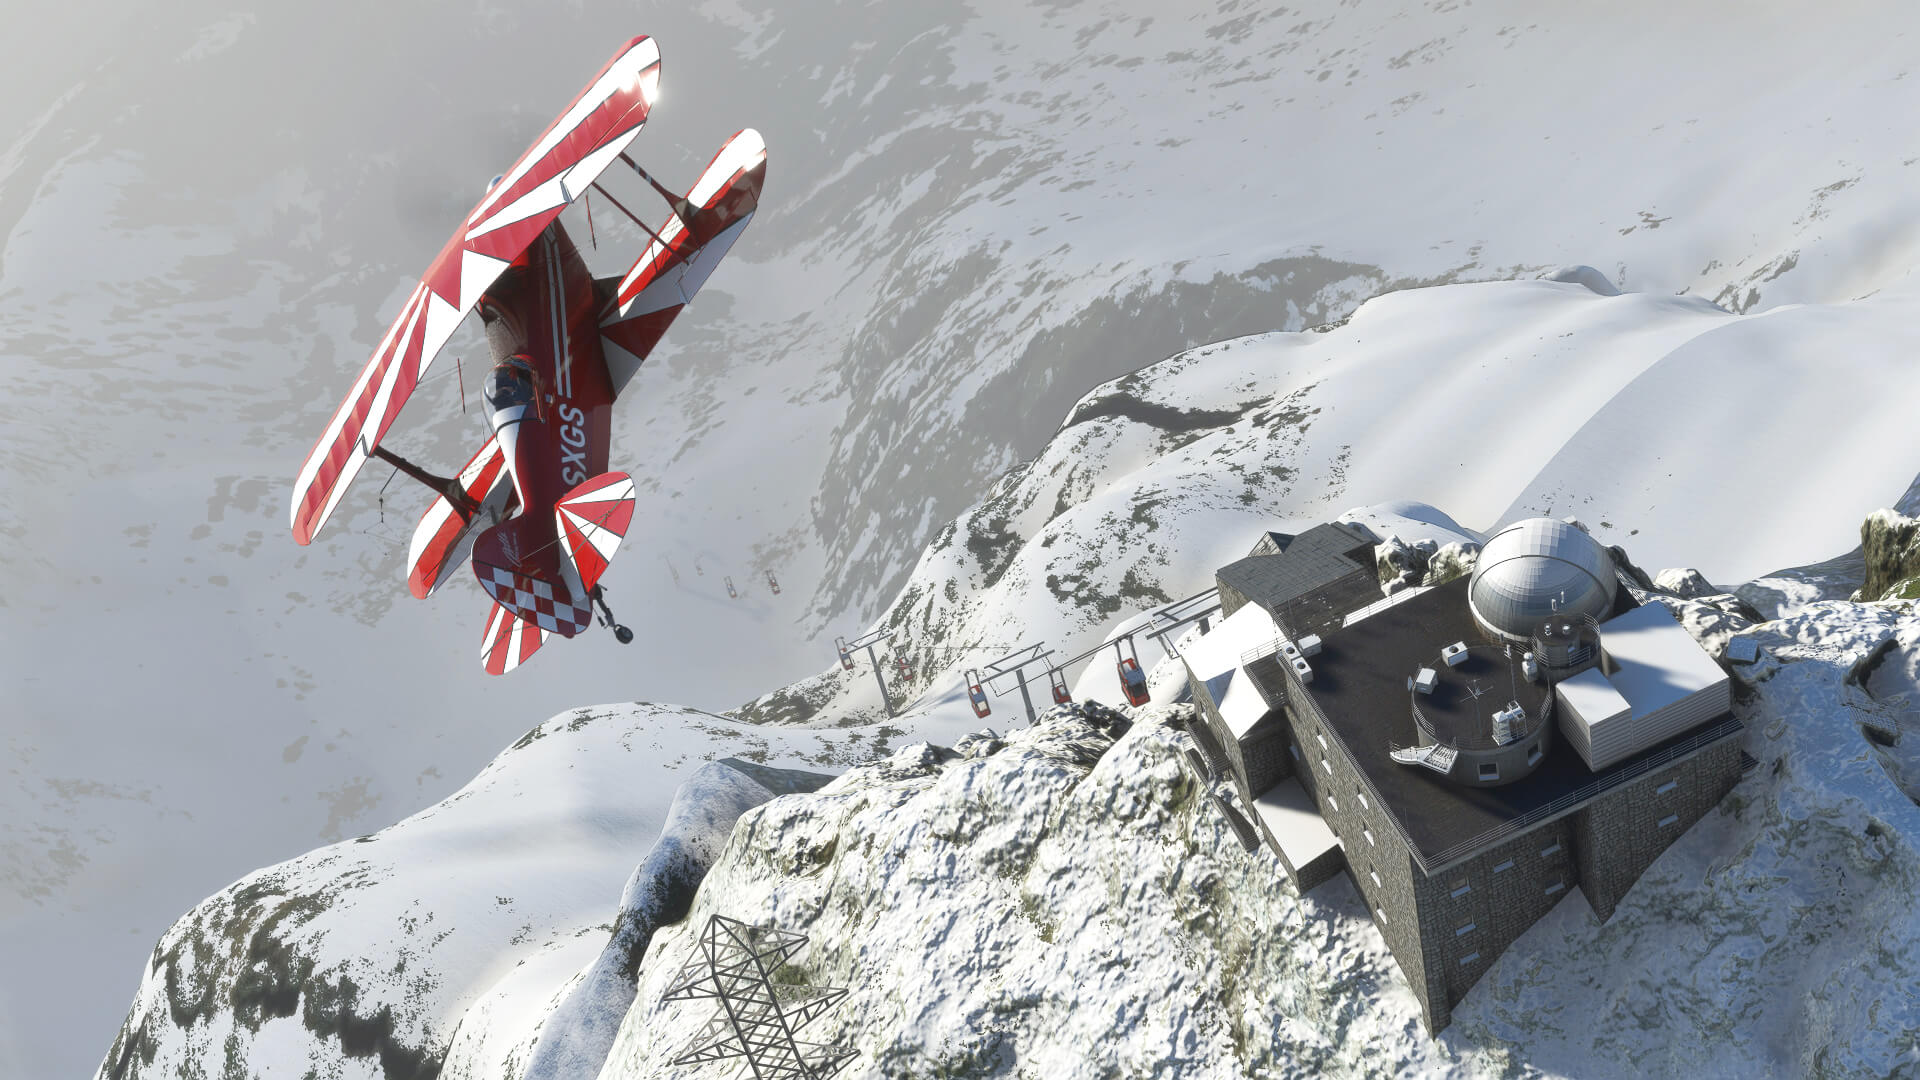 The Pitt bi-plane flies over a snow lift running down the side of a mountain.